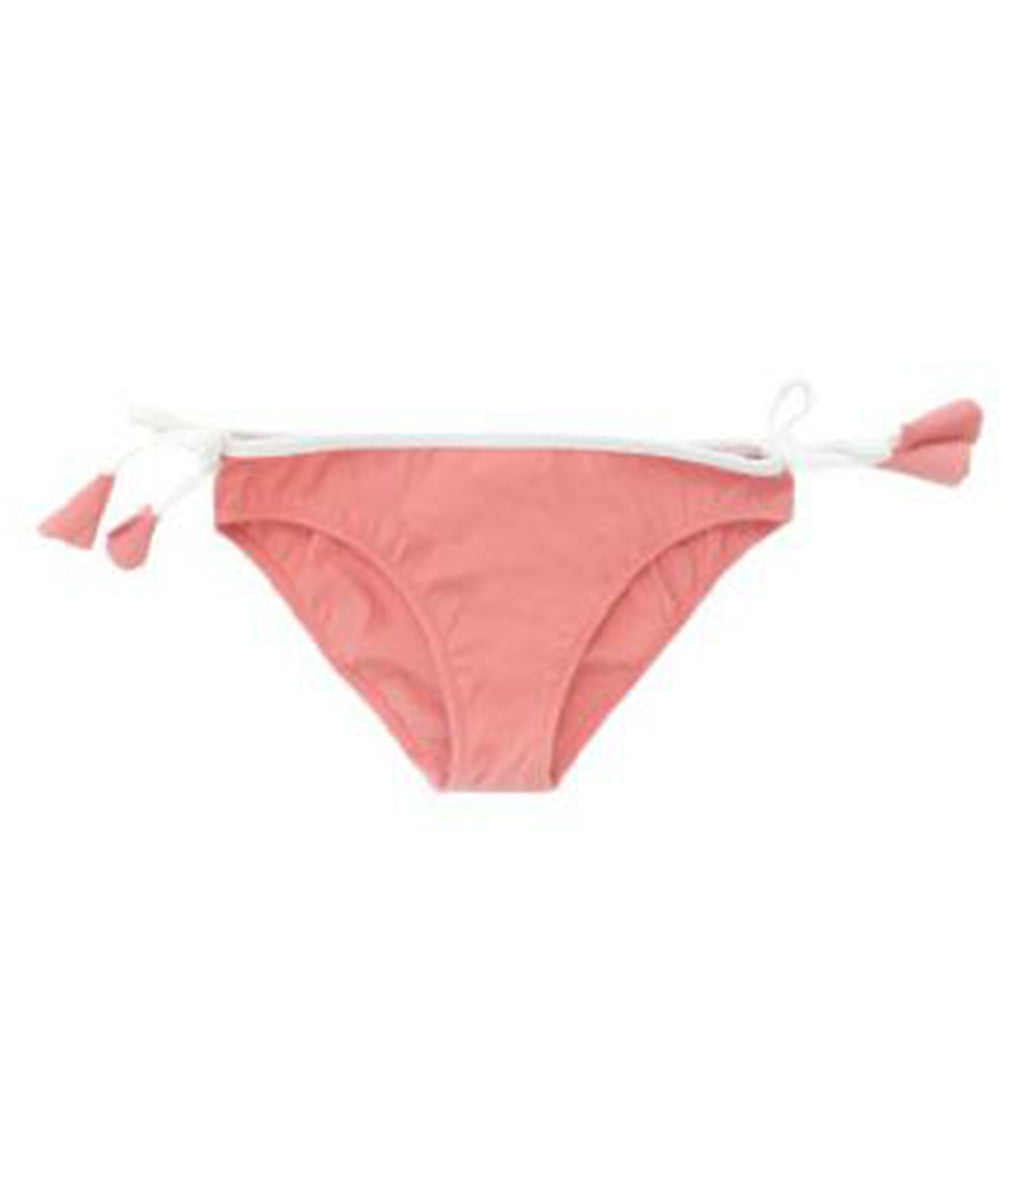 Isla swim pants - Coral Pink